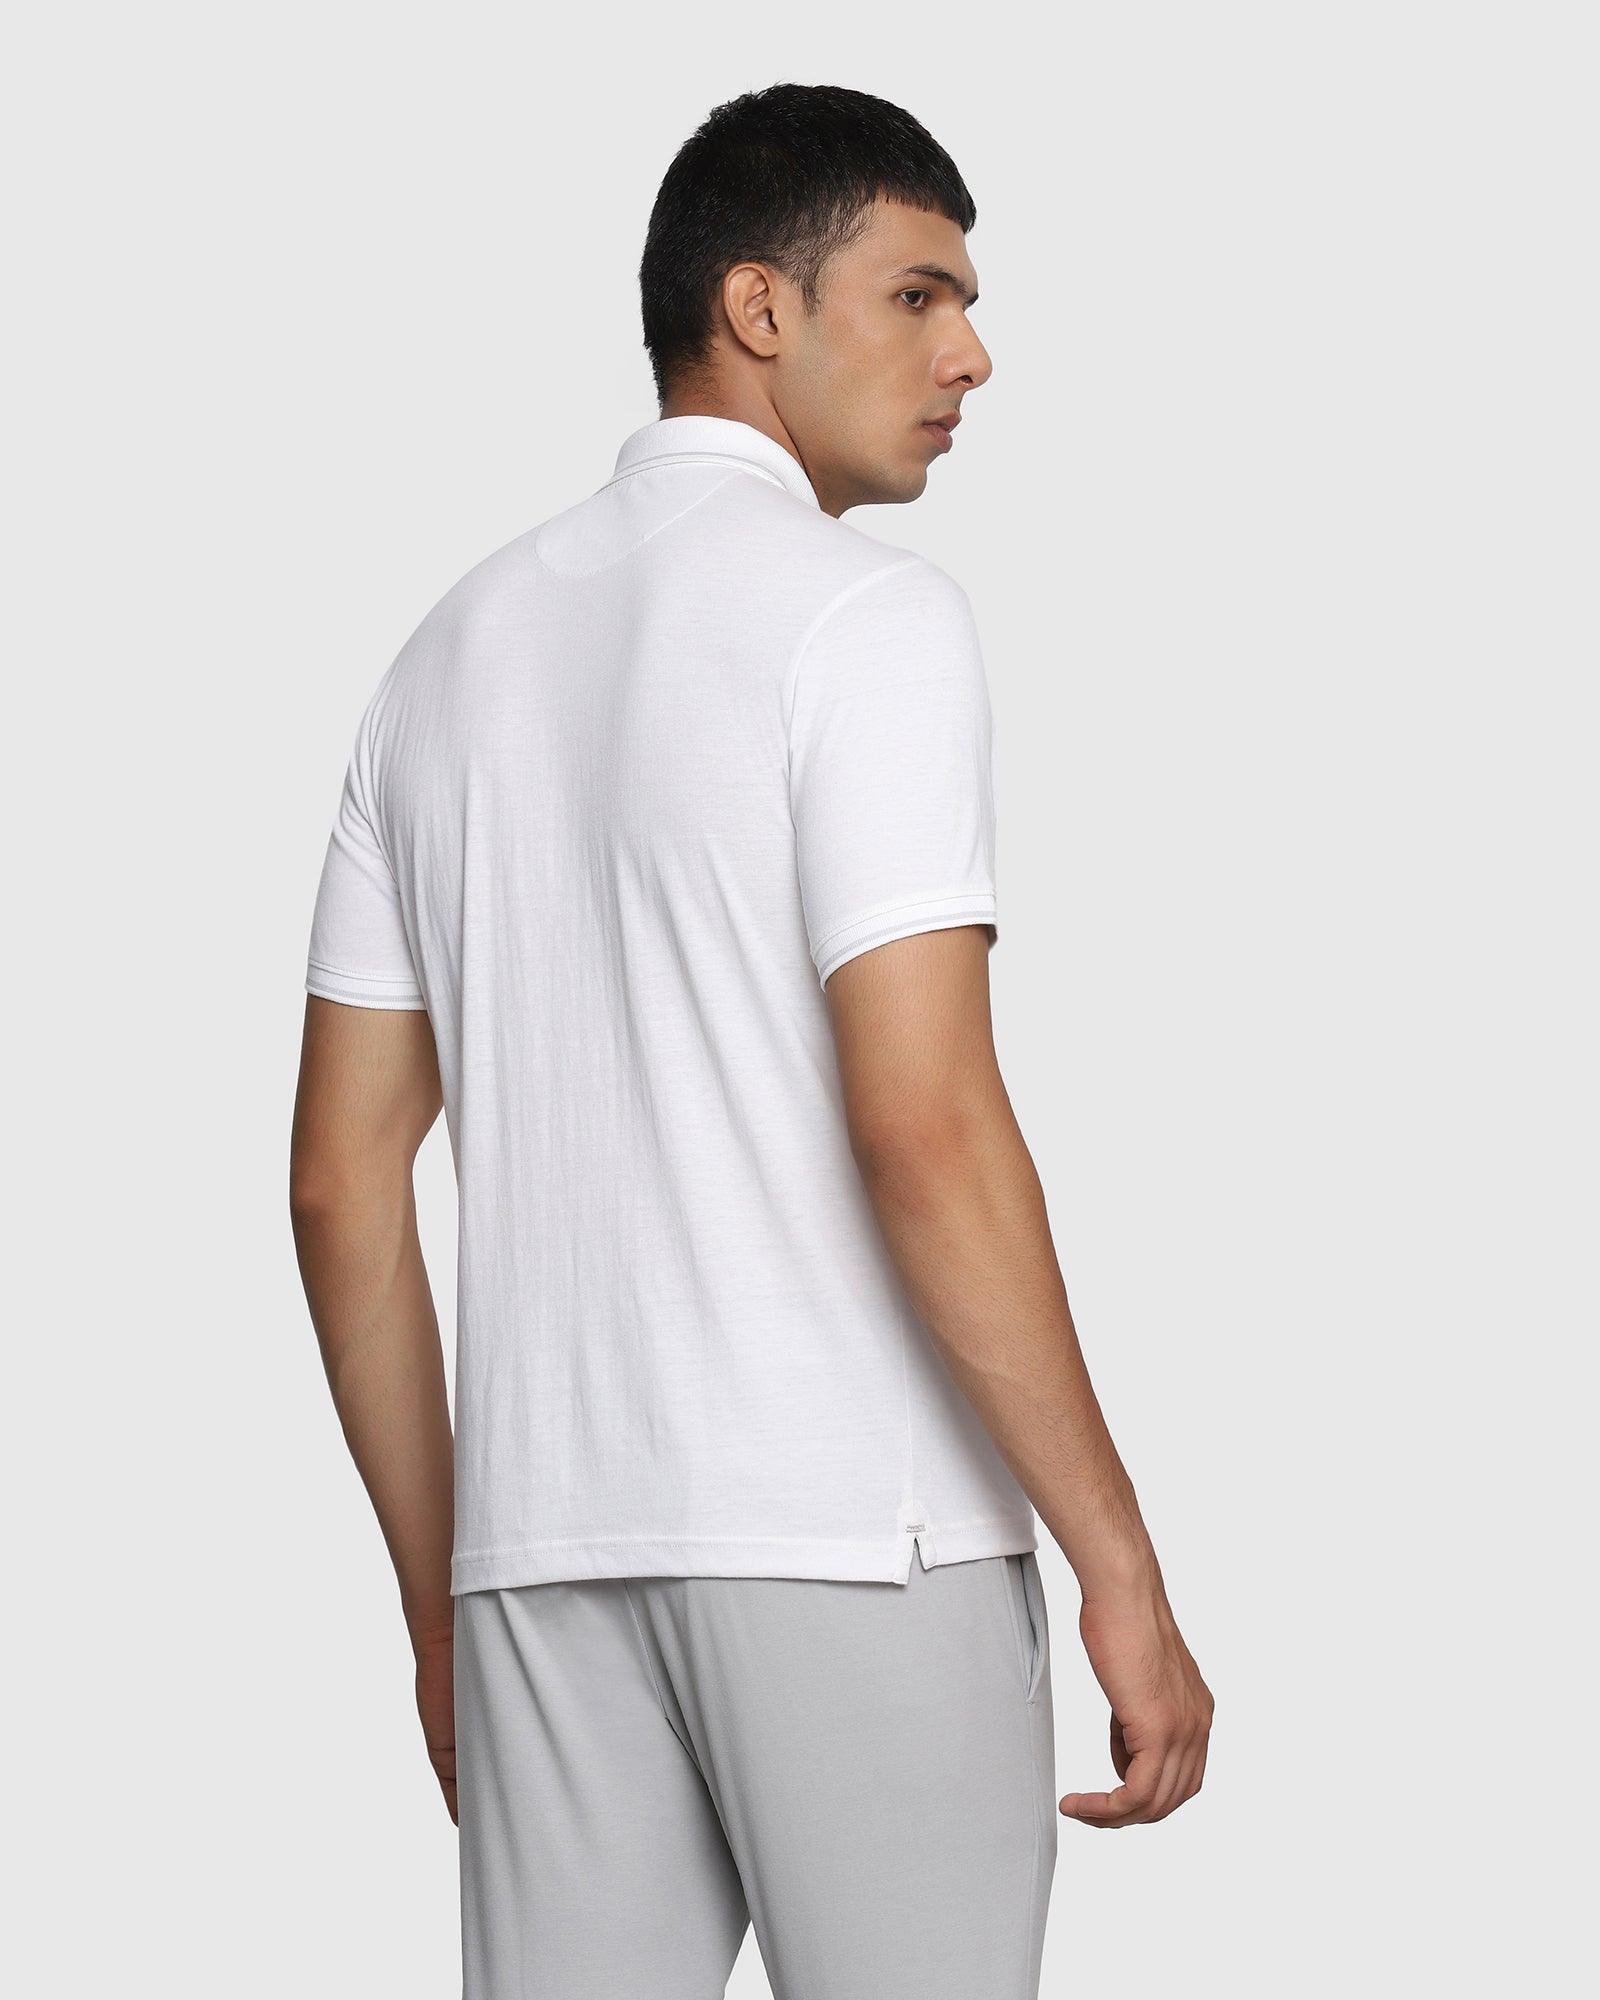 TechPro Polo White Printed T Shirt - Jack